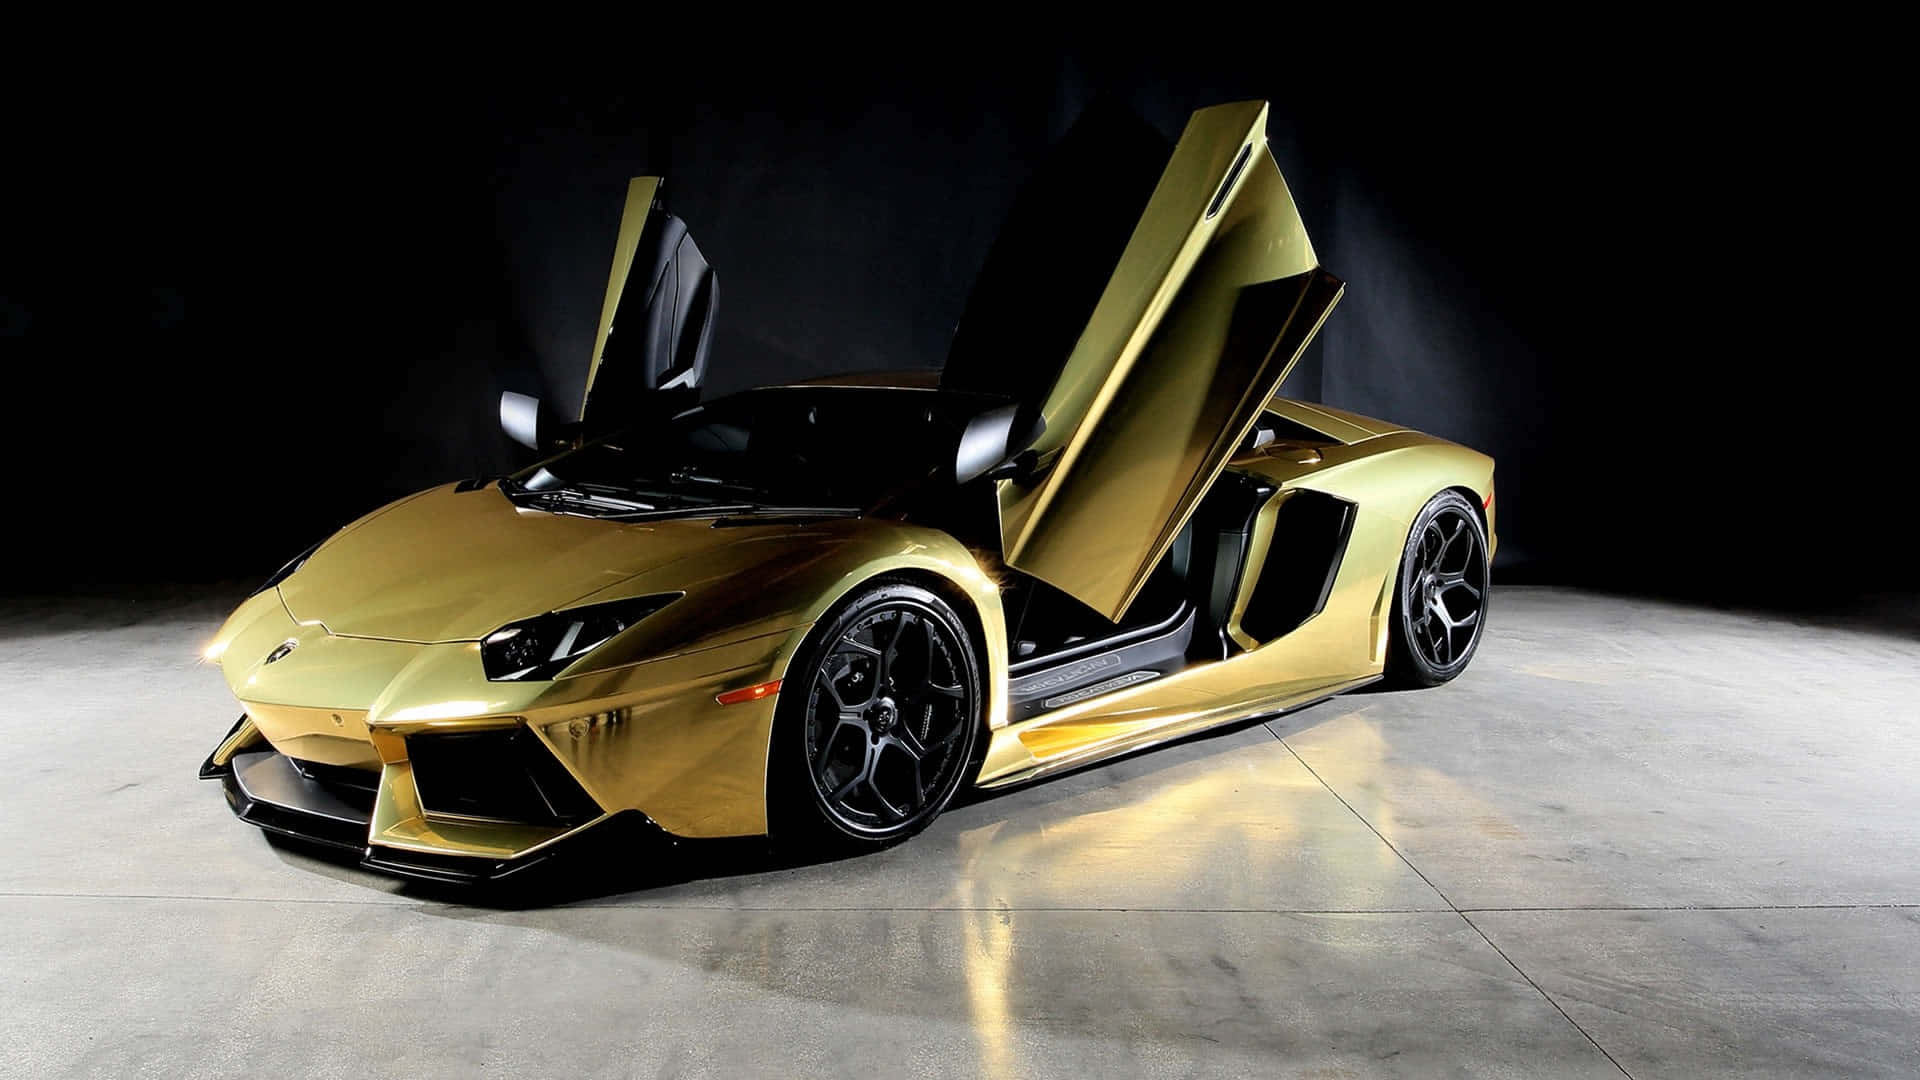 Luxuspersonifiziert - Der Goldene Lamborghini Wallpaper